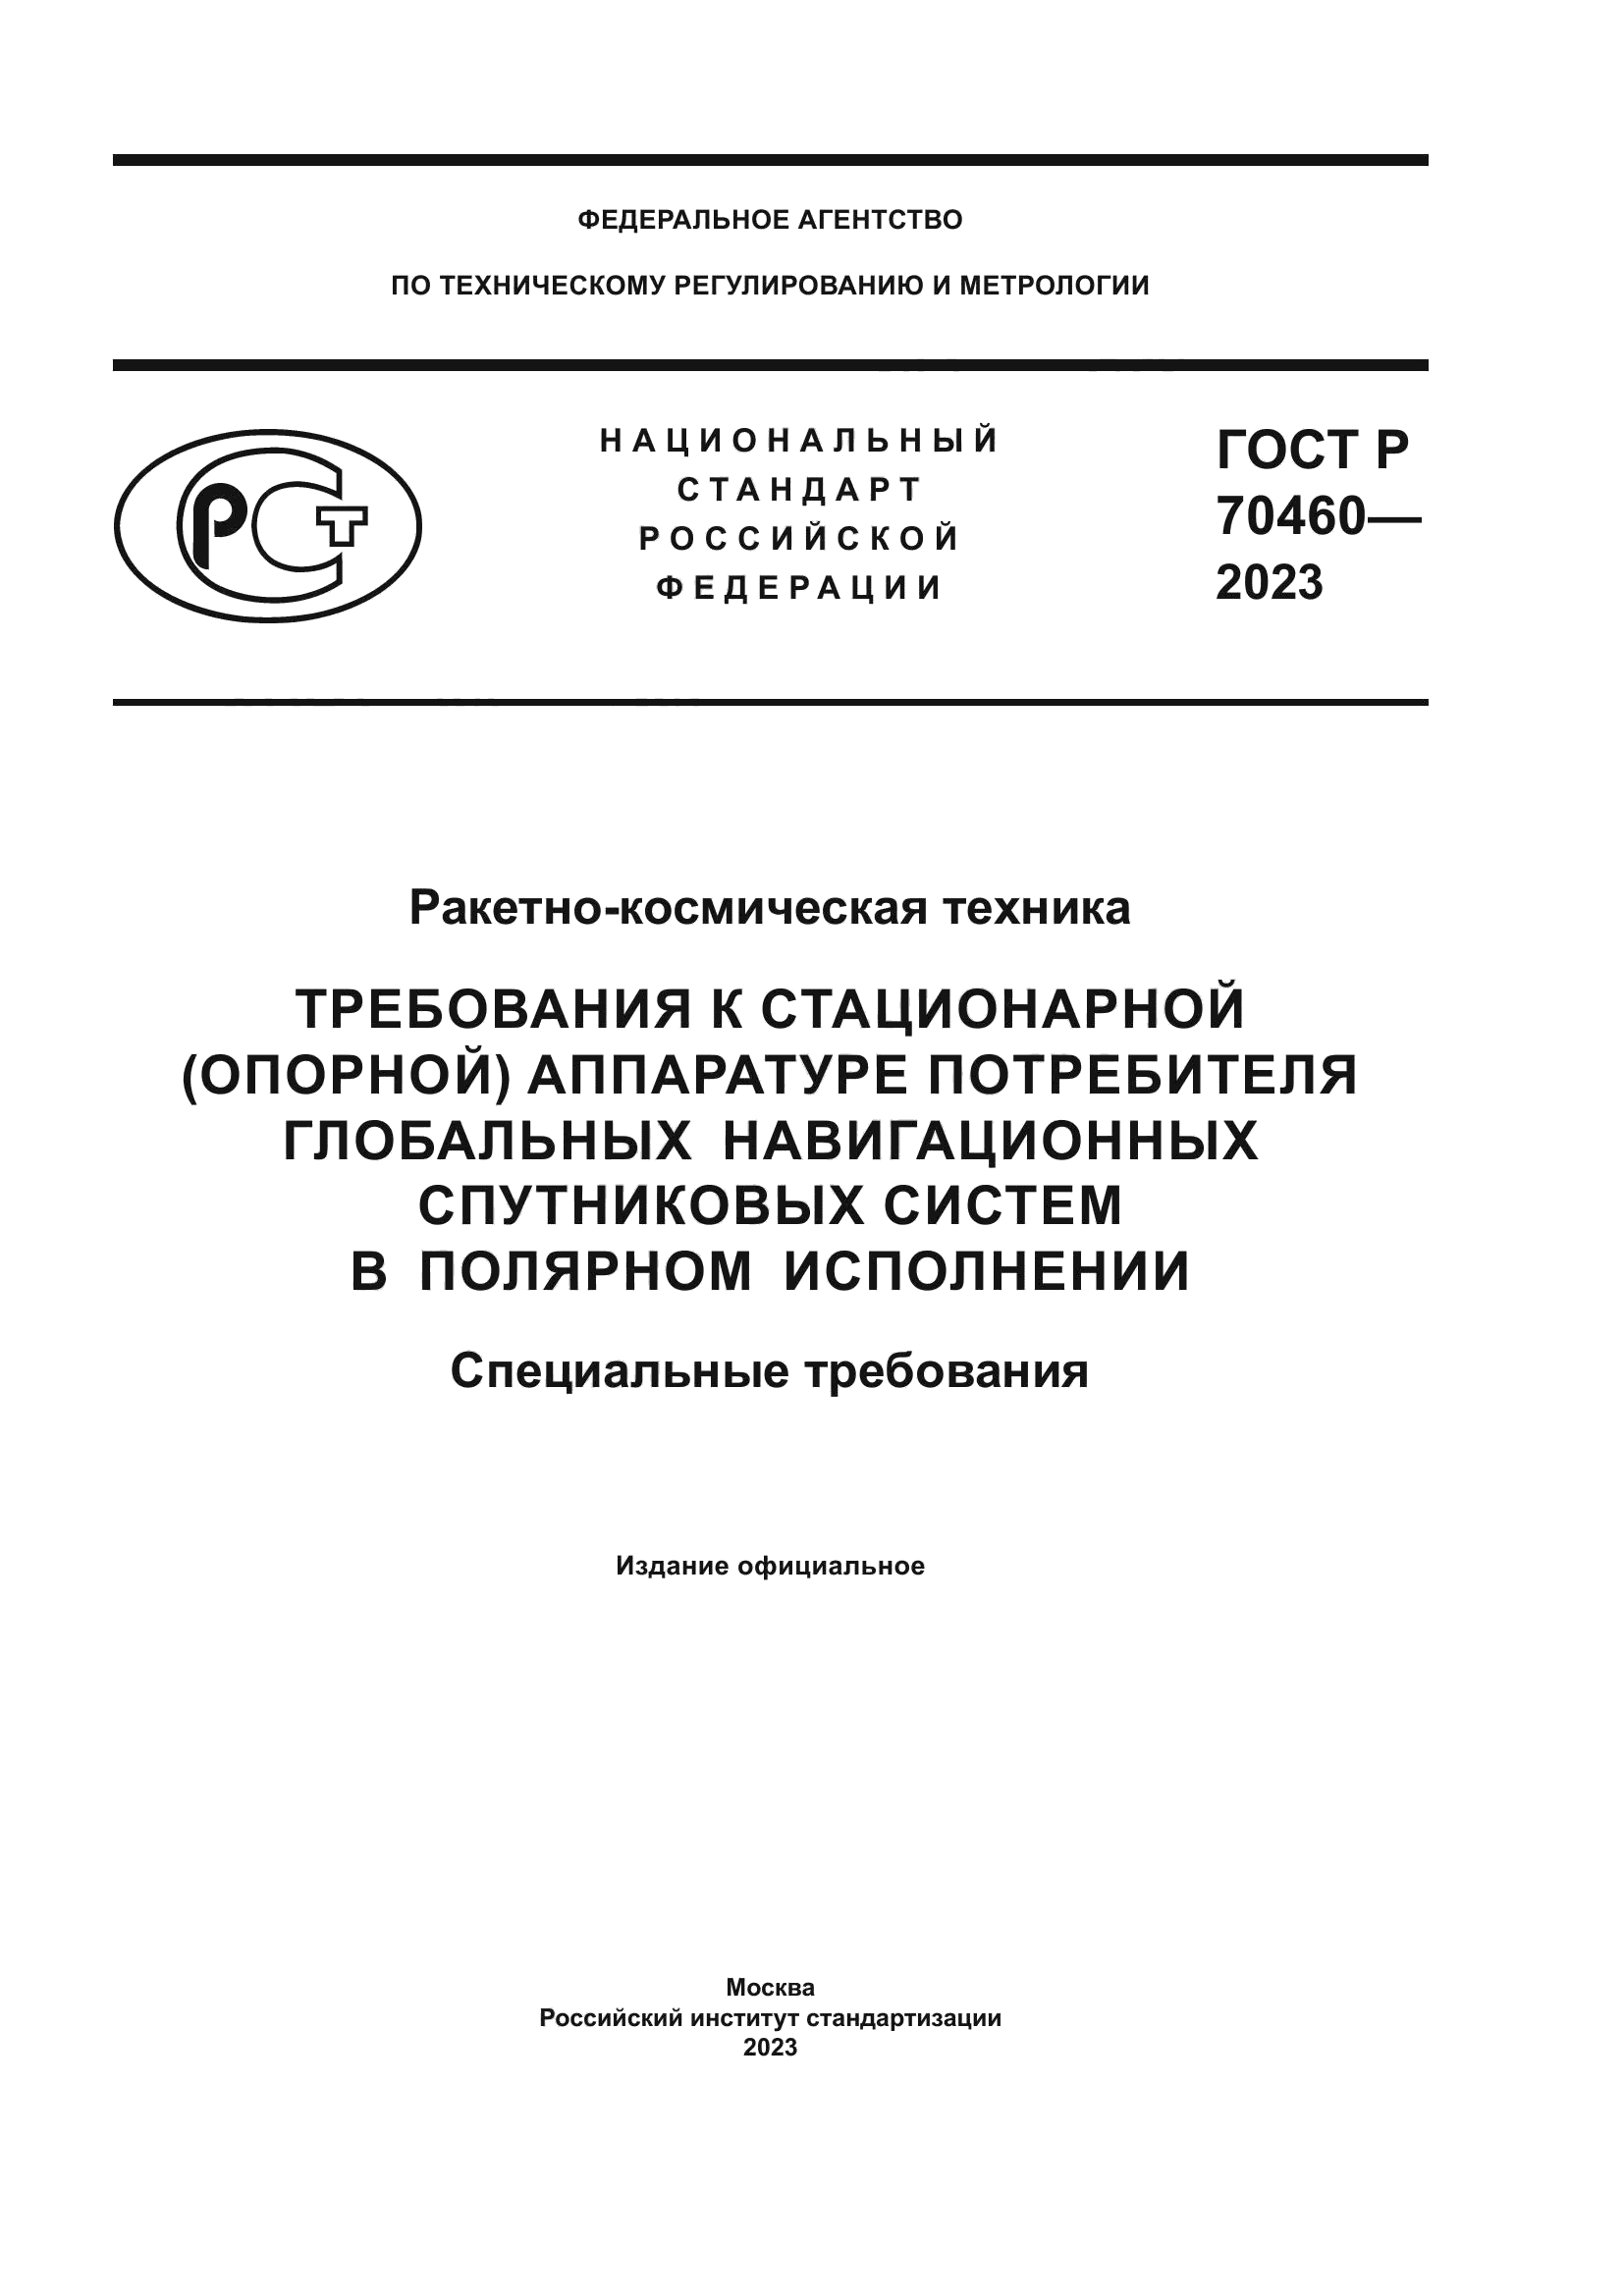 ГОСТ Р 70460-2023